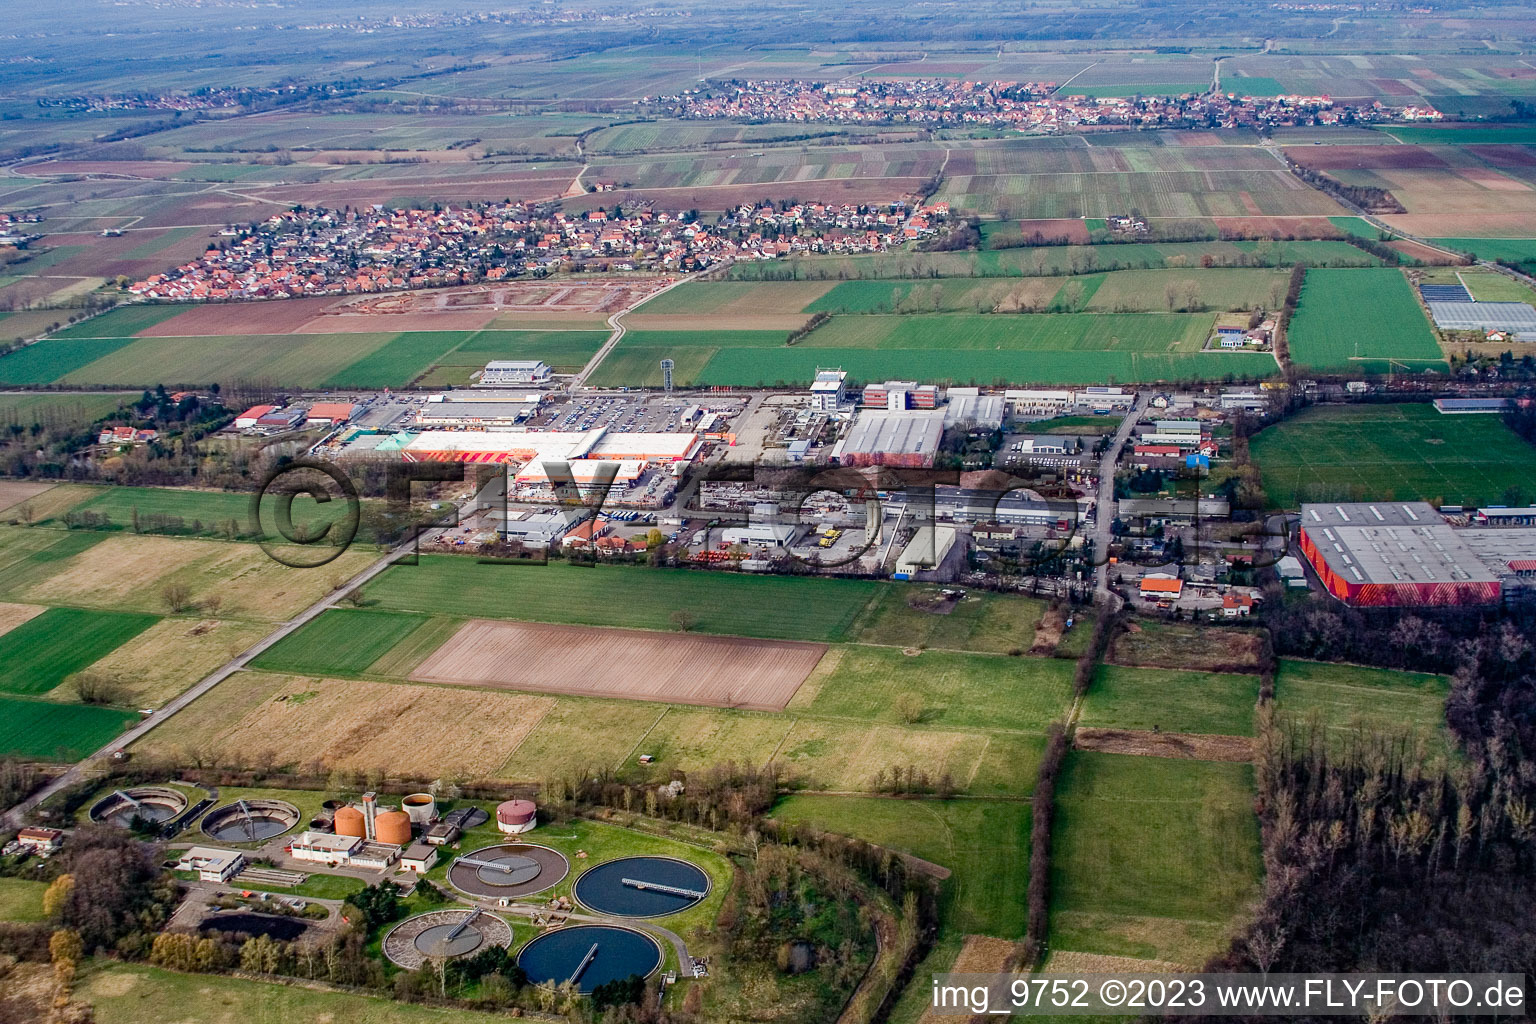 Industrial area Bruchwiesenstr in Bornheim in the state Rhineland-Palatinate, Germany